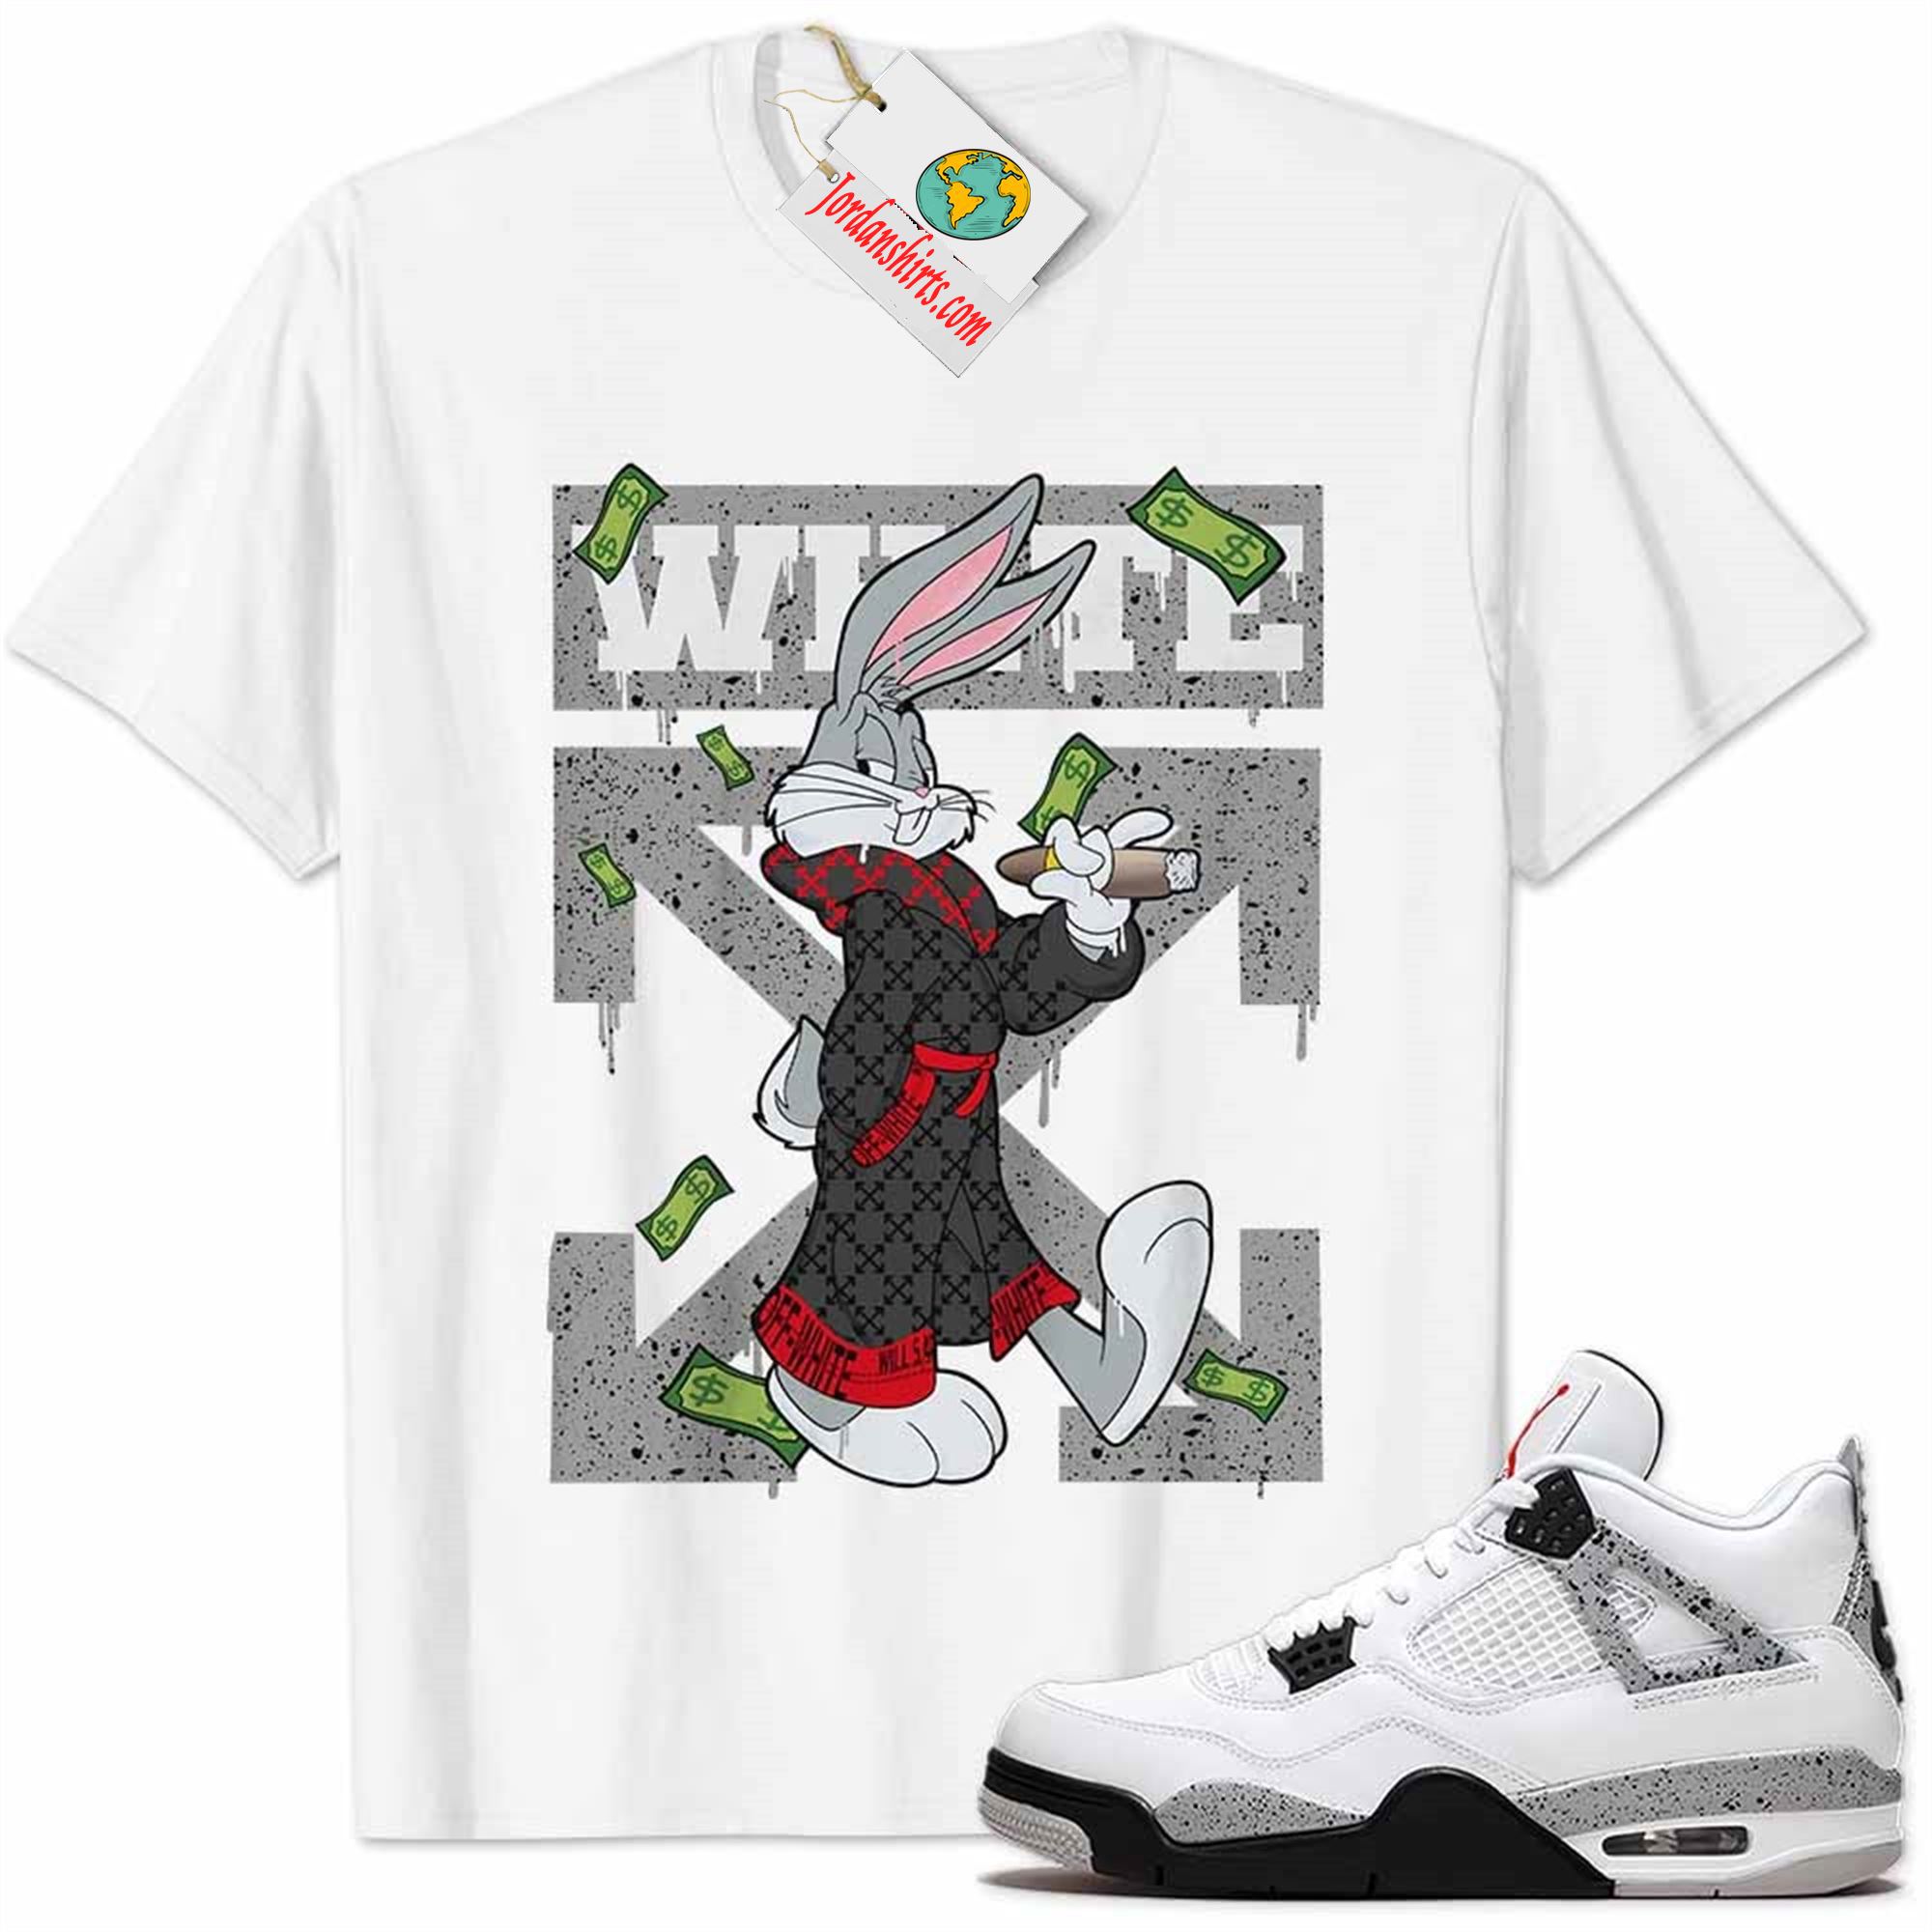 Jordan 4 Shirt, Jordan 4 Cement Shirt Bug Bunny Smokes Weed Money Falling White Size Up To 5xl